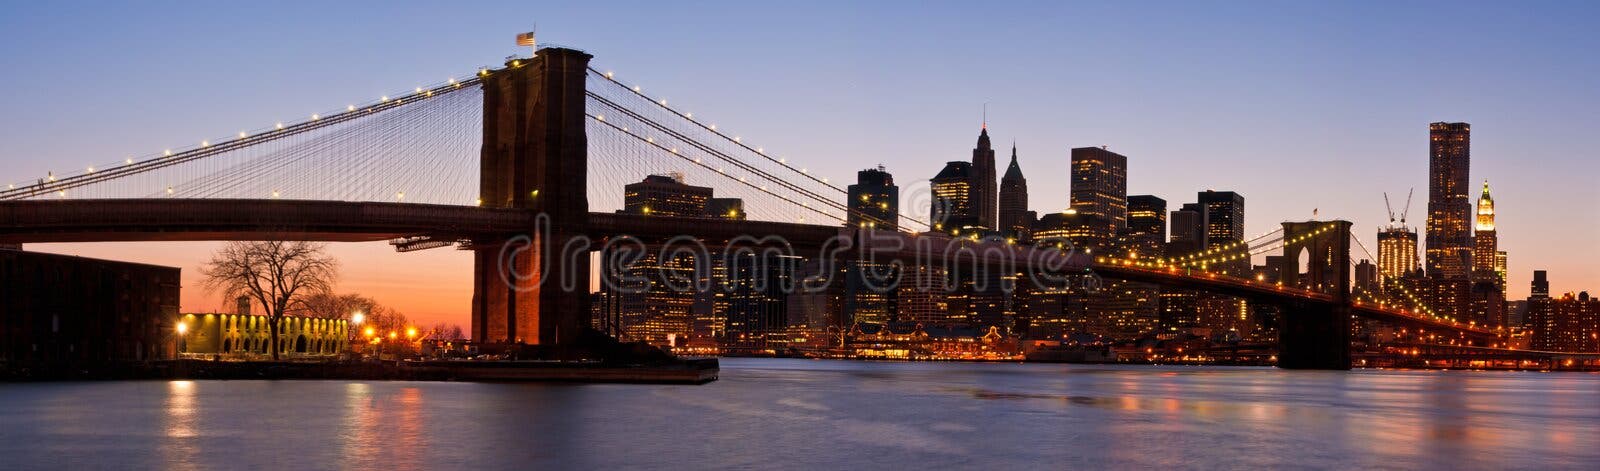 New York City Night Panorama with Brooklyn Bridge Stock Image - Image ...